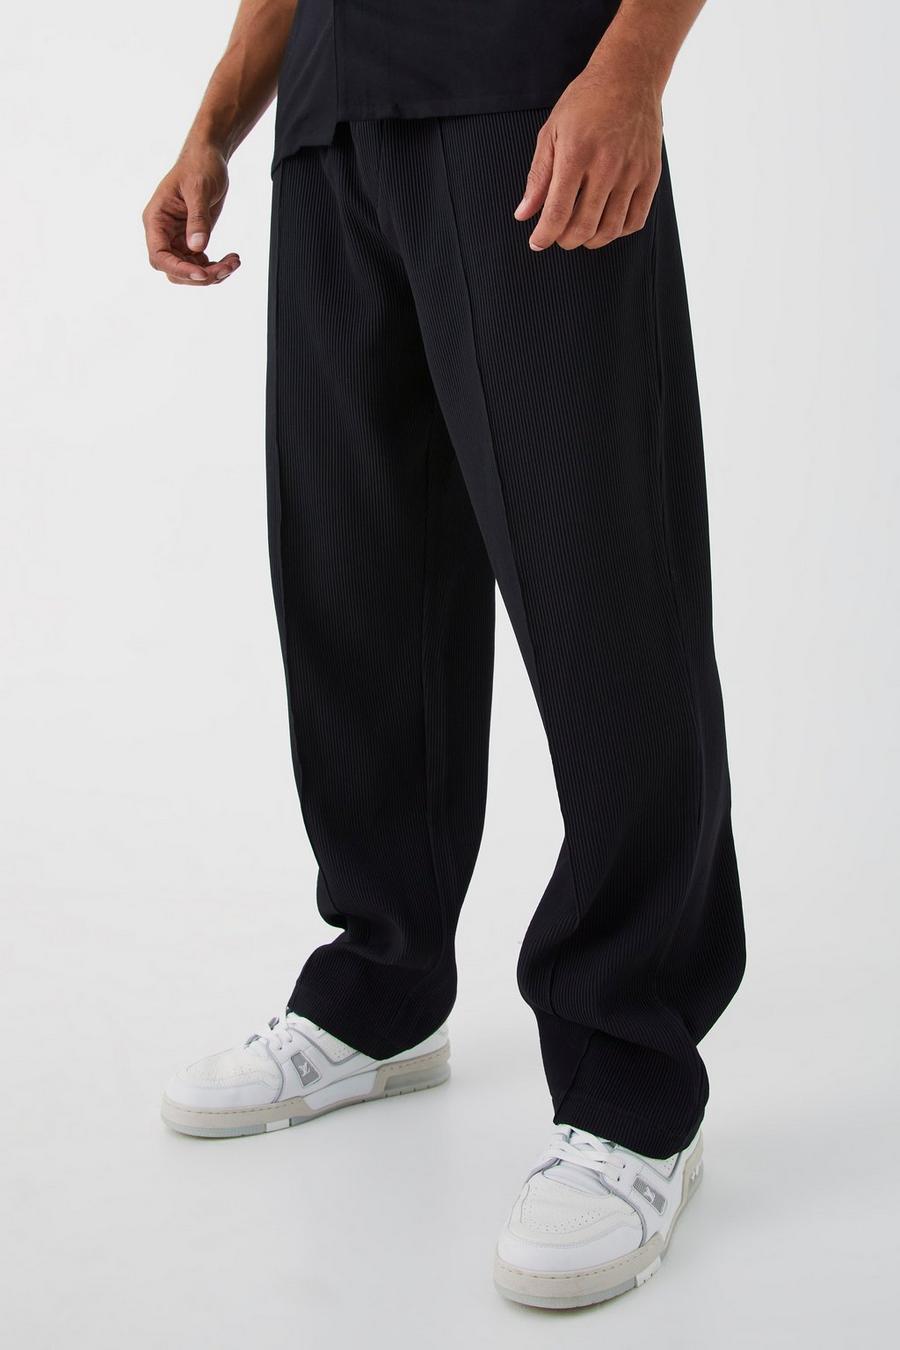 https://media.boohoo.com/i/boohoo/bmm56309_black_xl/male-black-elastic-waist-relaxed-fit-pleated-trouser/?w=900&qlt=default&fmt.jp2.qlt=70&fmt=auto&sm=fit